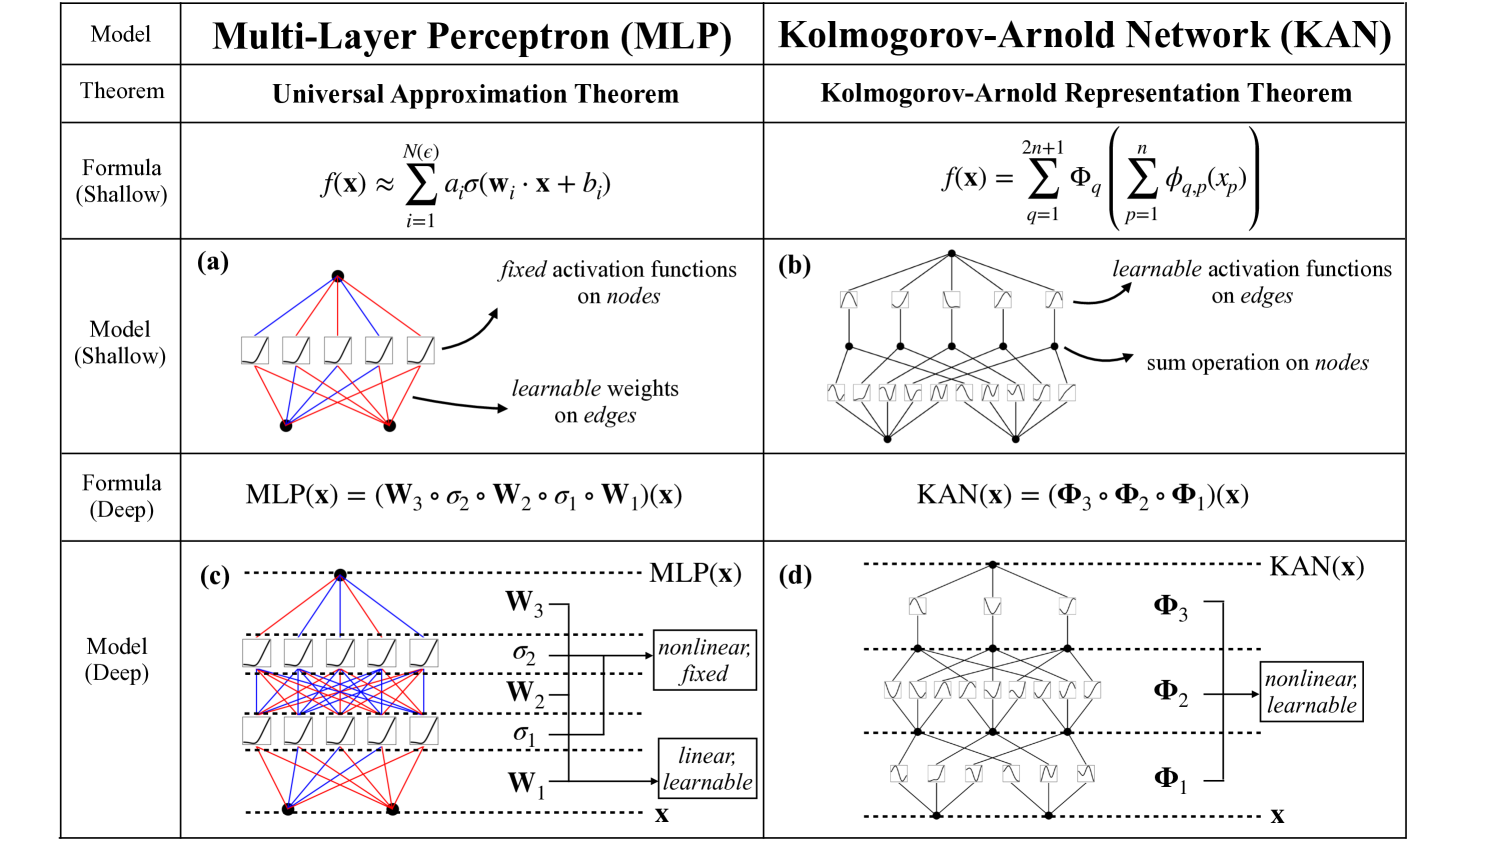 Kolmogorov-Arnold Networks (KANs)